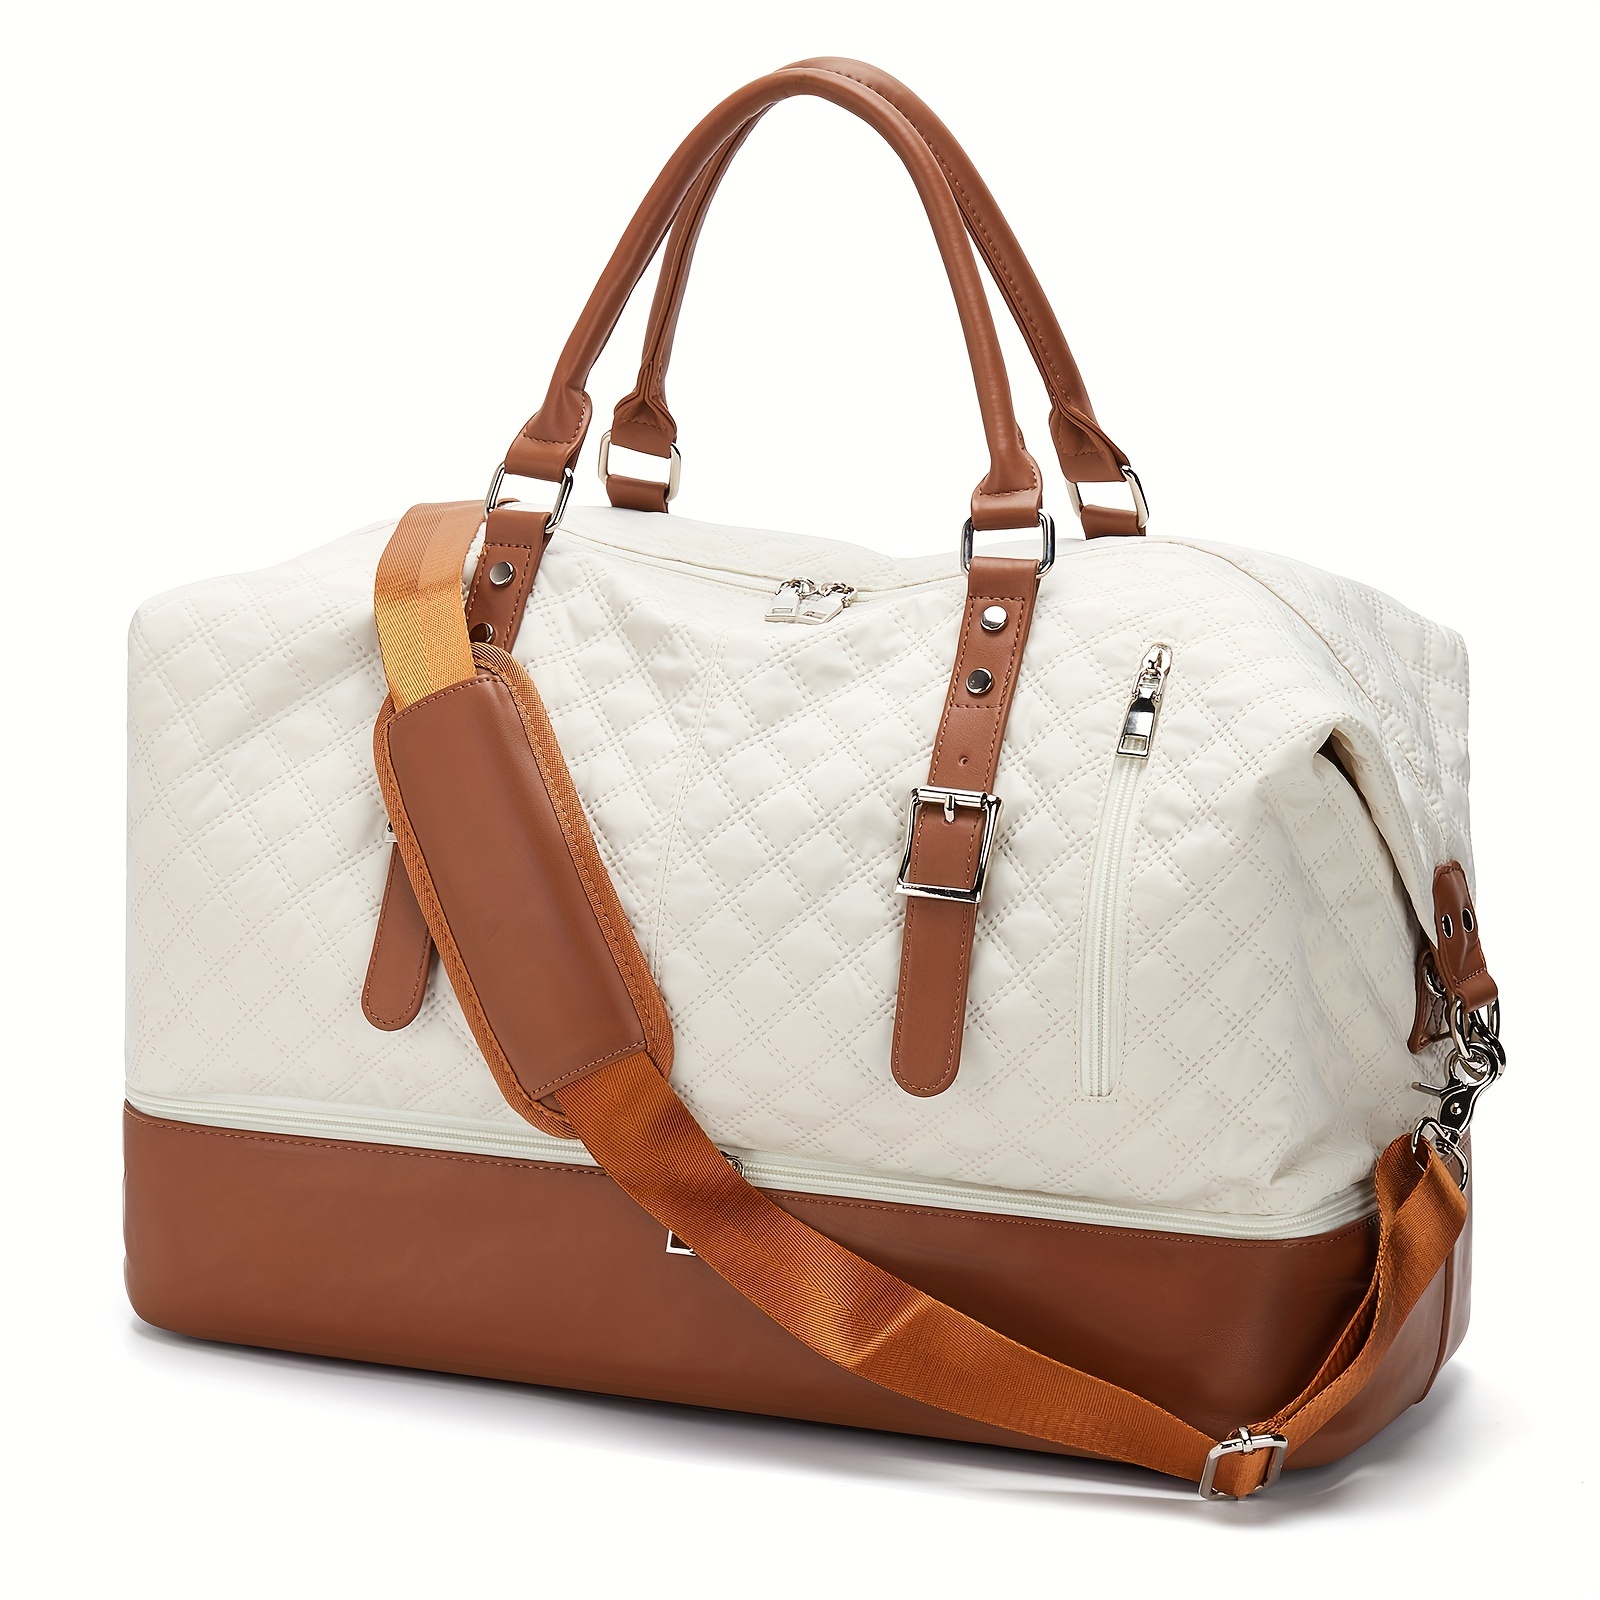 Women Large Duffle Bag Travel Gym Tote Overnight Bag Handbag